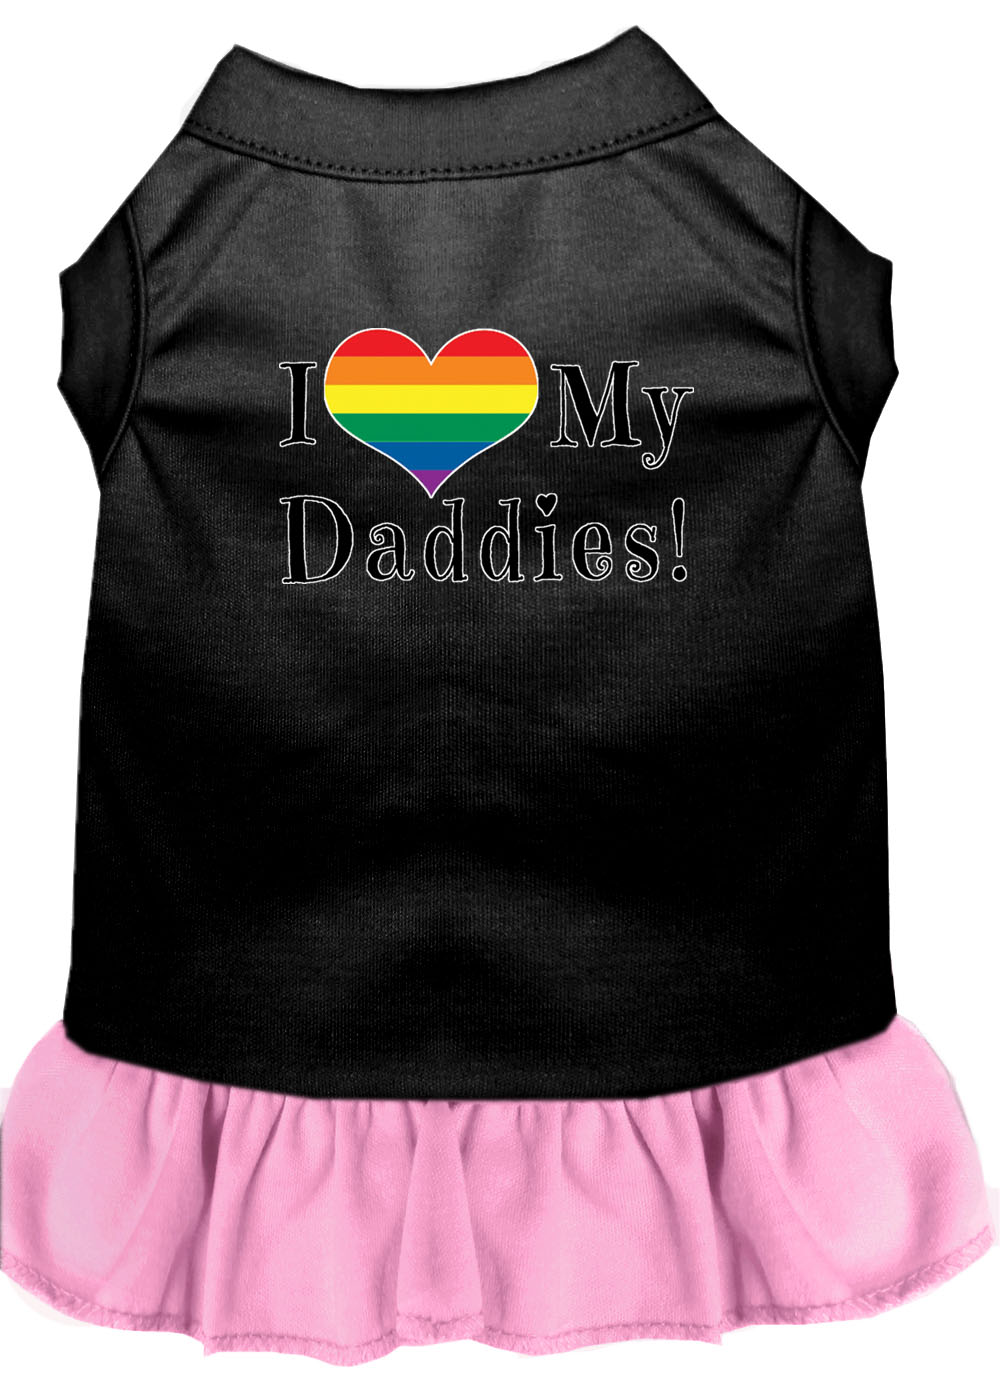 I Heart my Daddies Screen Print Dog Dress Black with Light Pink Med